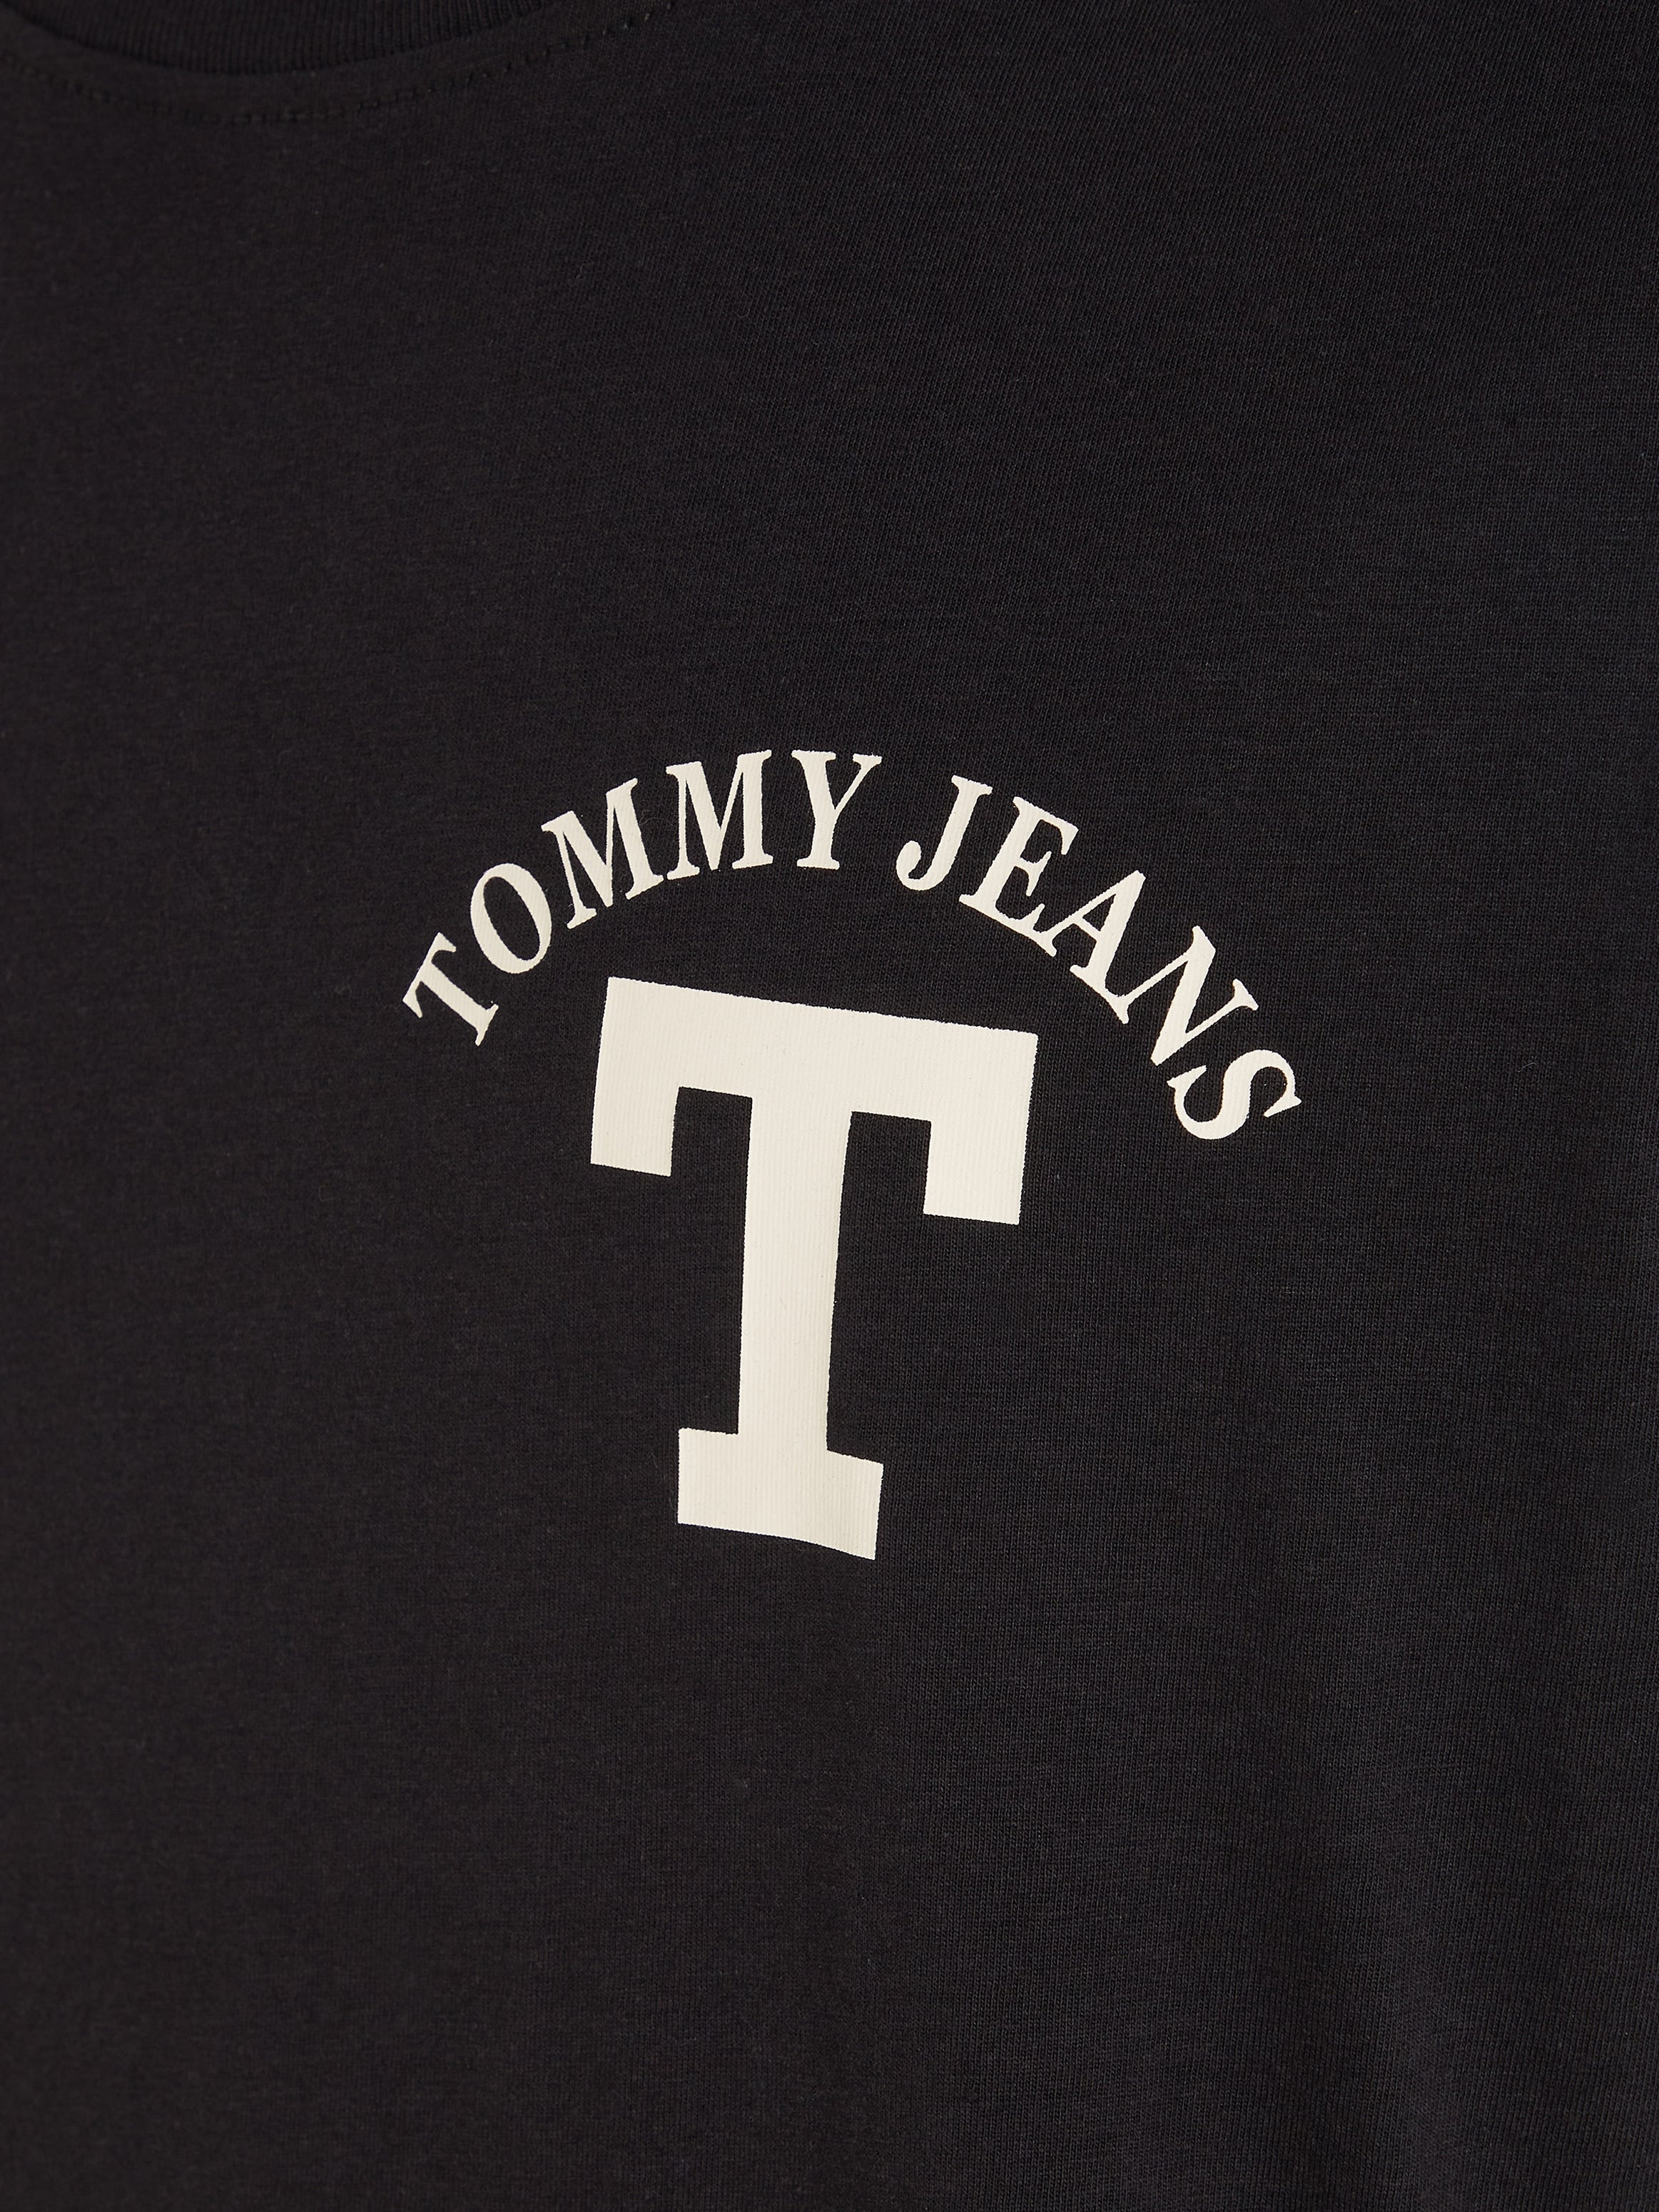 - Tommy Men Jeans for Galvin Black Letterman - Curved T-Shirt